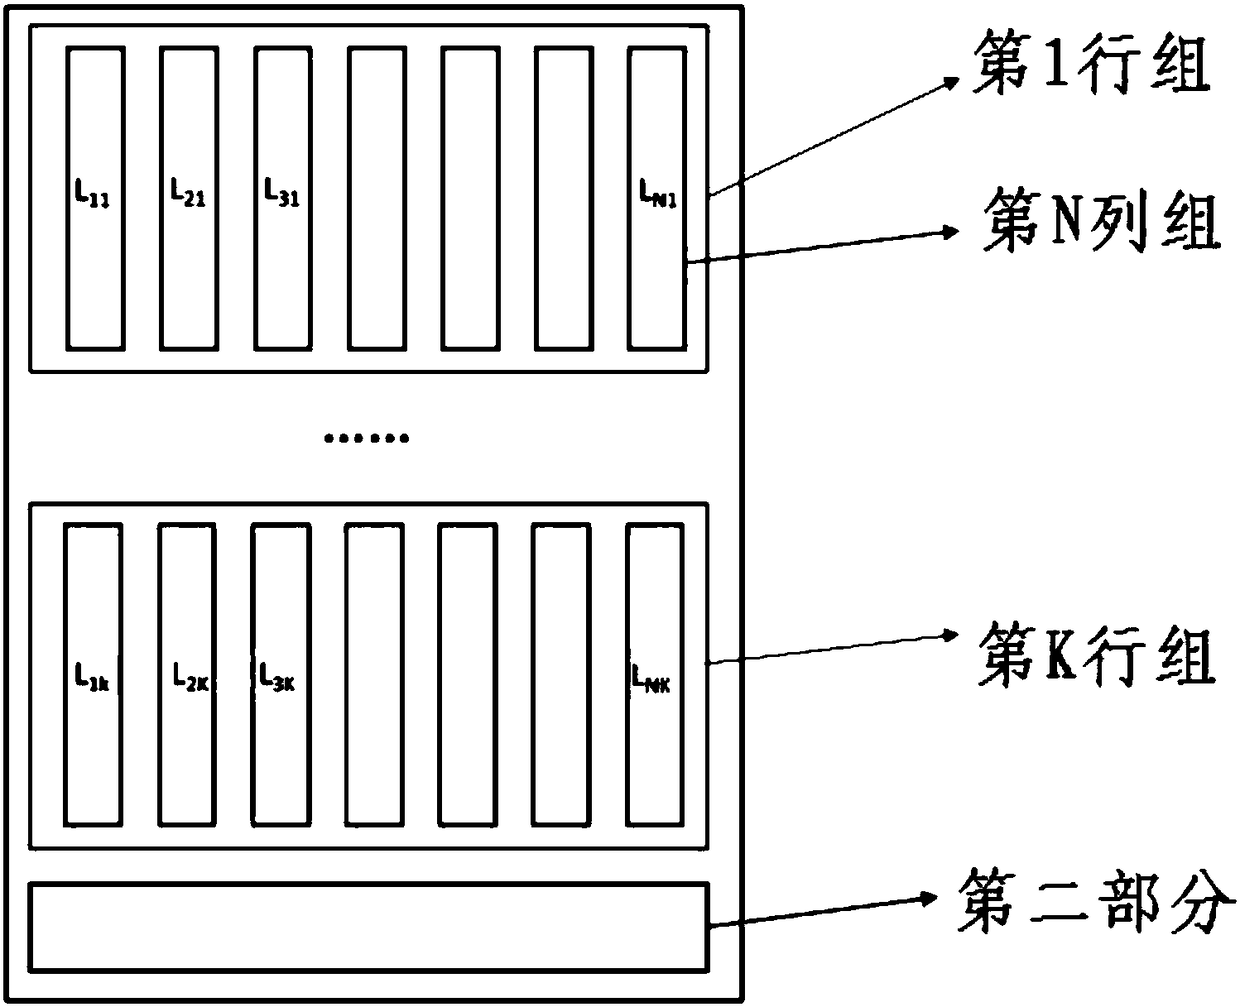 Time series data storage method based on multilayer column-type storage structure